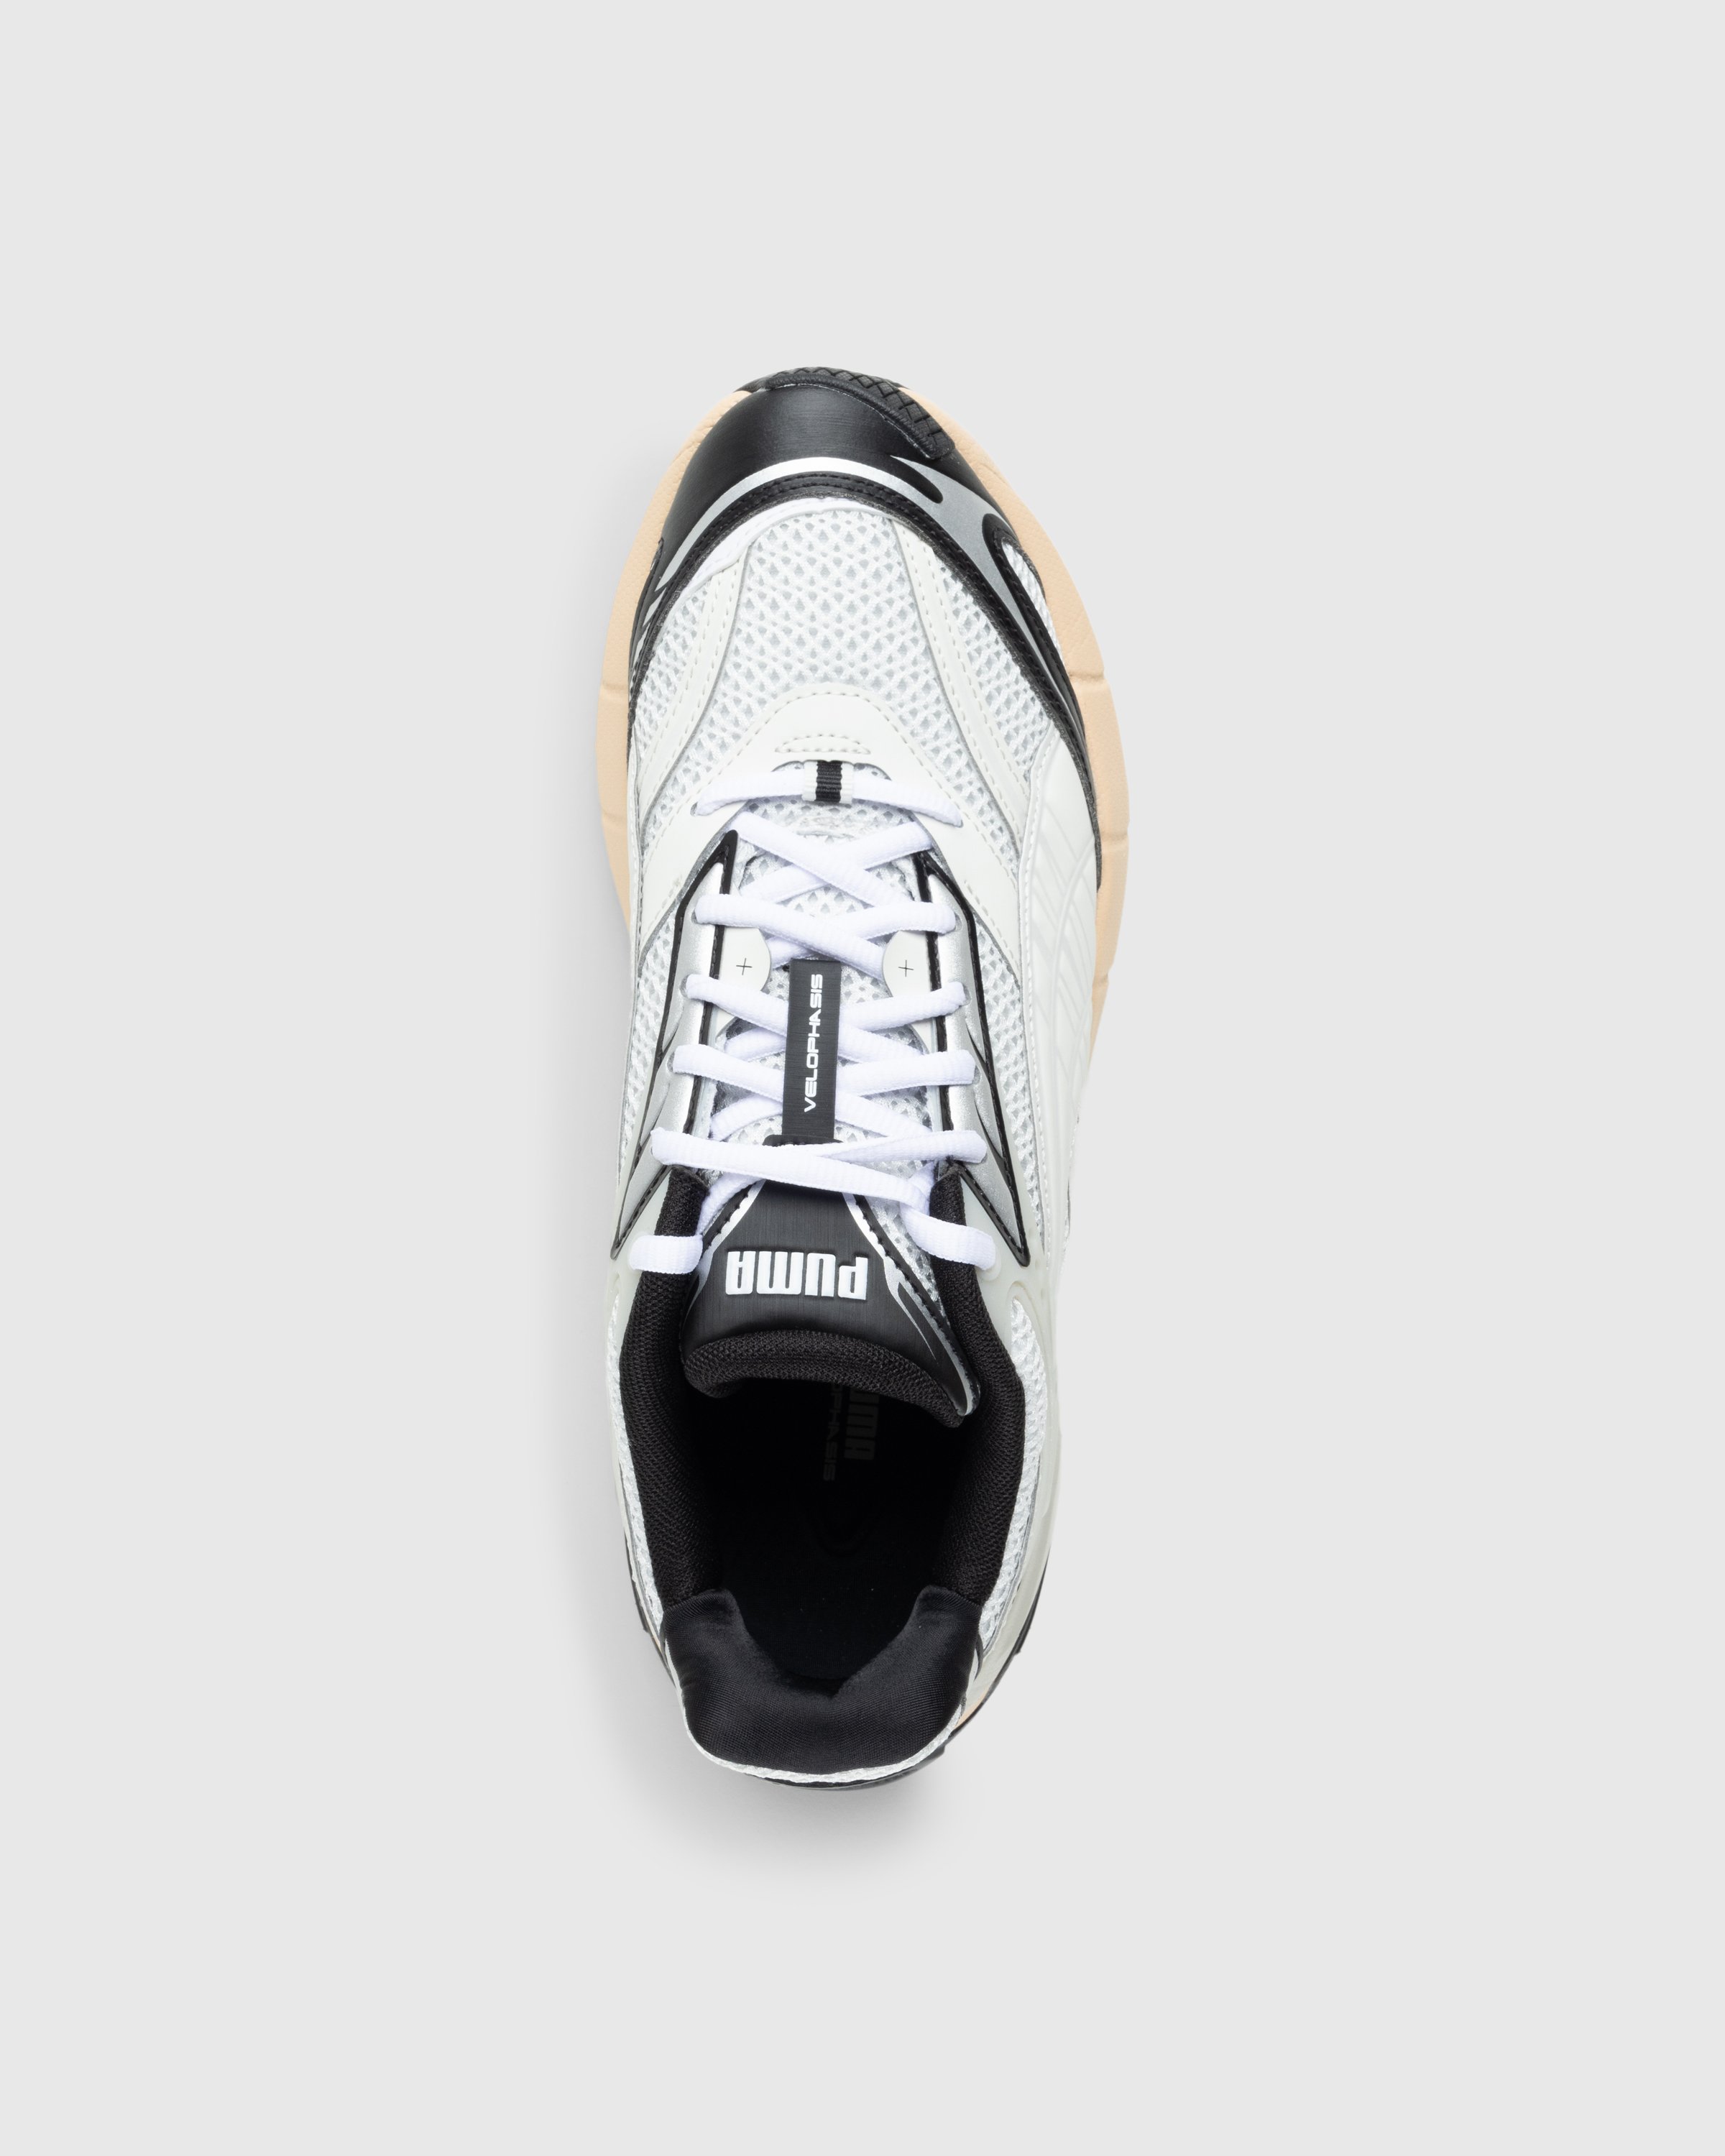 Puma - Velophasis Technisch Sedate Grey/Cashew - Footwear - Multi - Image 5